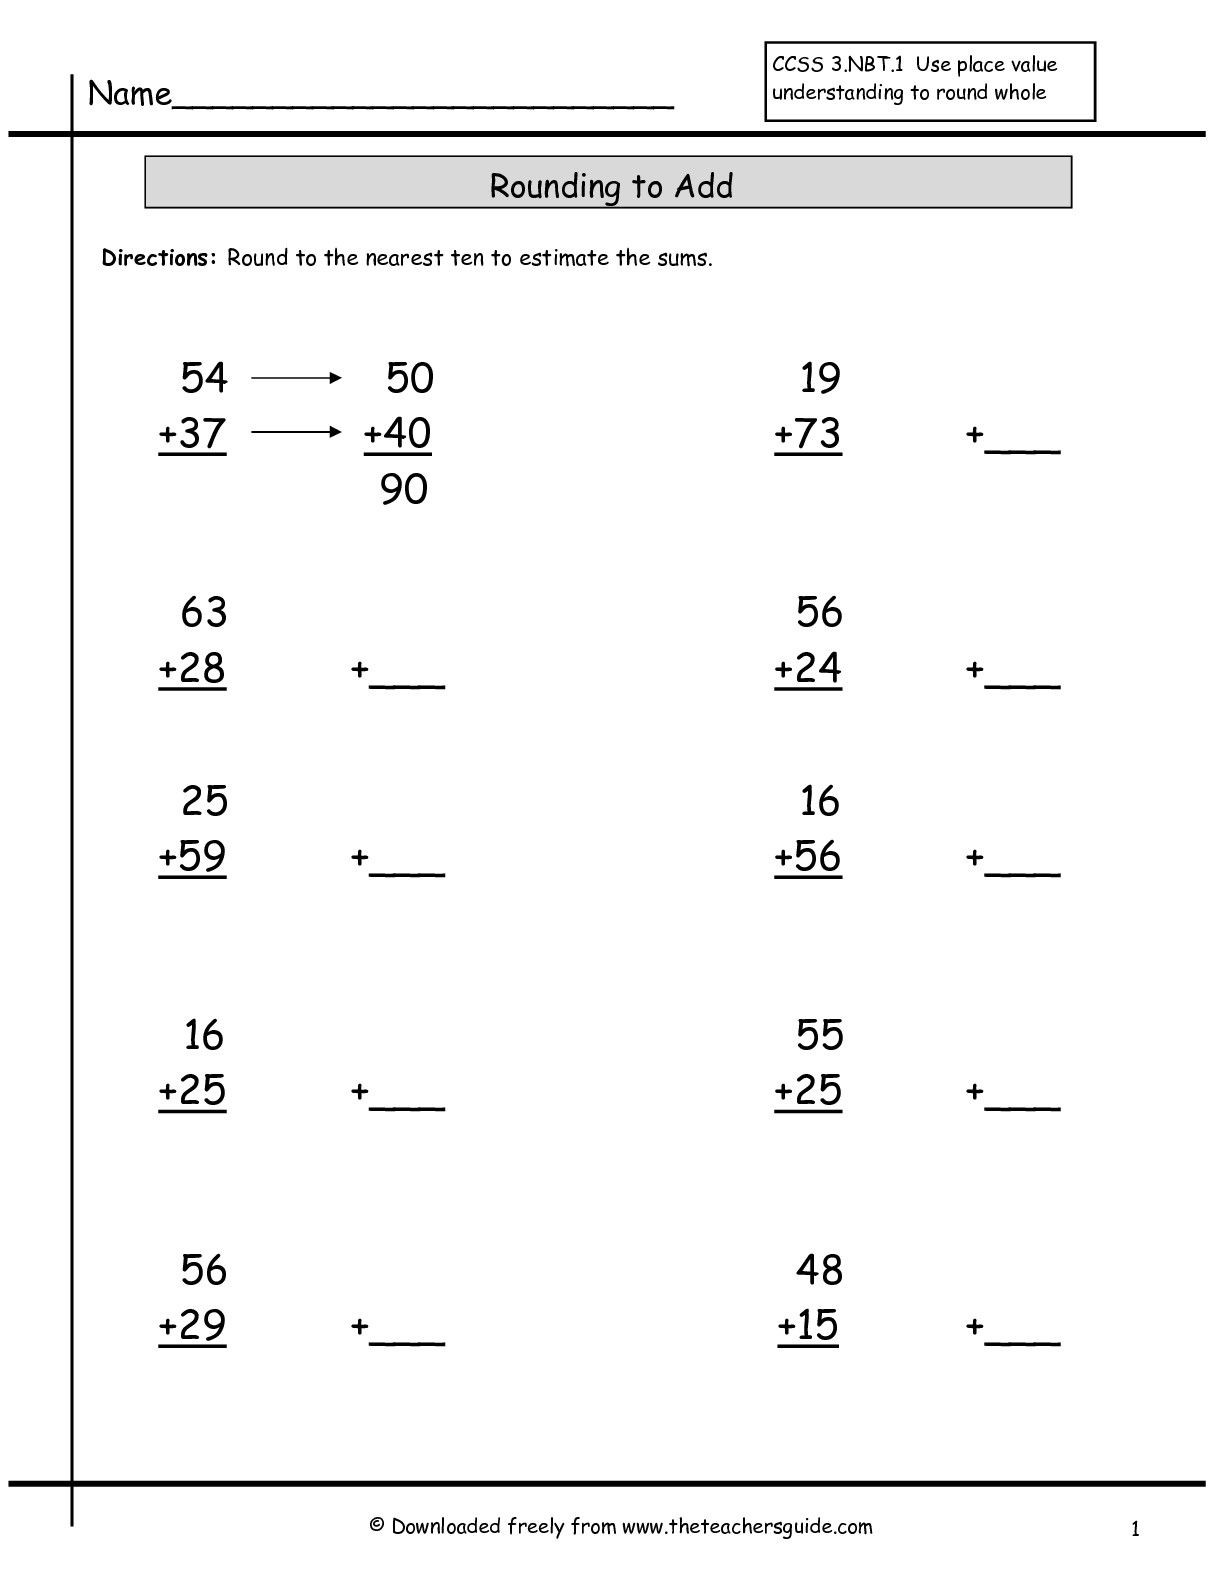 Estimation Worksheet 3rd Grade Rounding to Estimate the Sum Worksheet